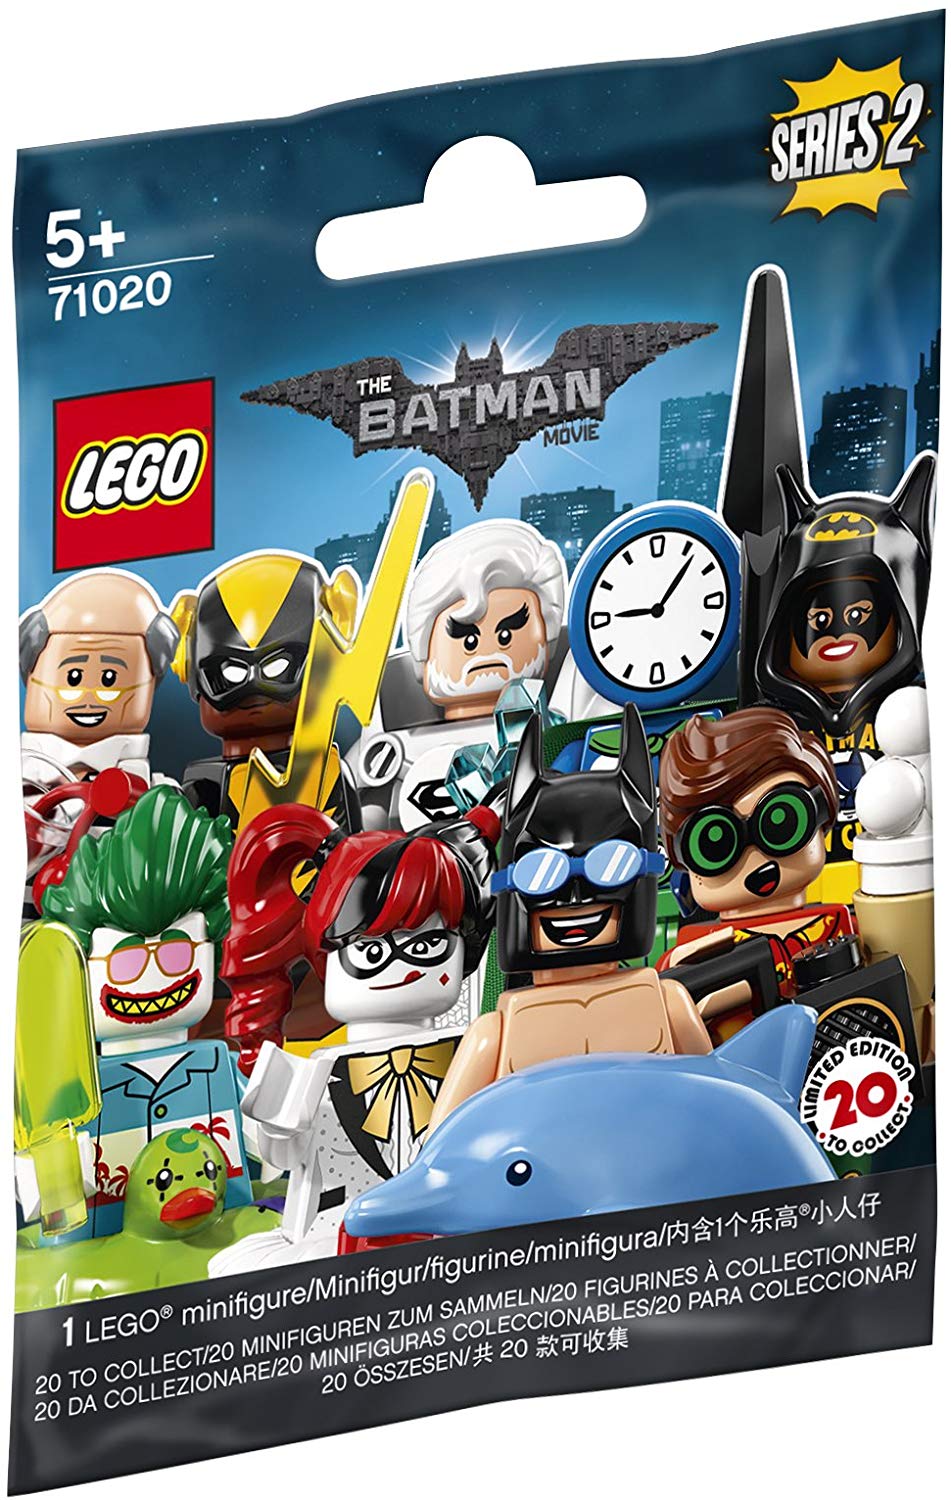 Lego The Batman Movie 710202 Mini Figure Collectable